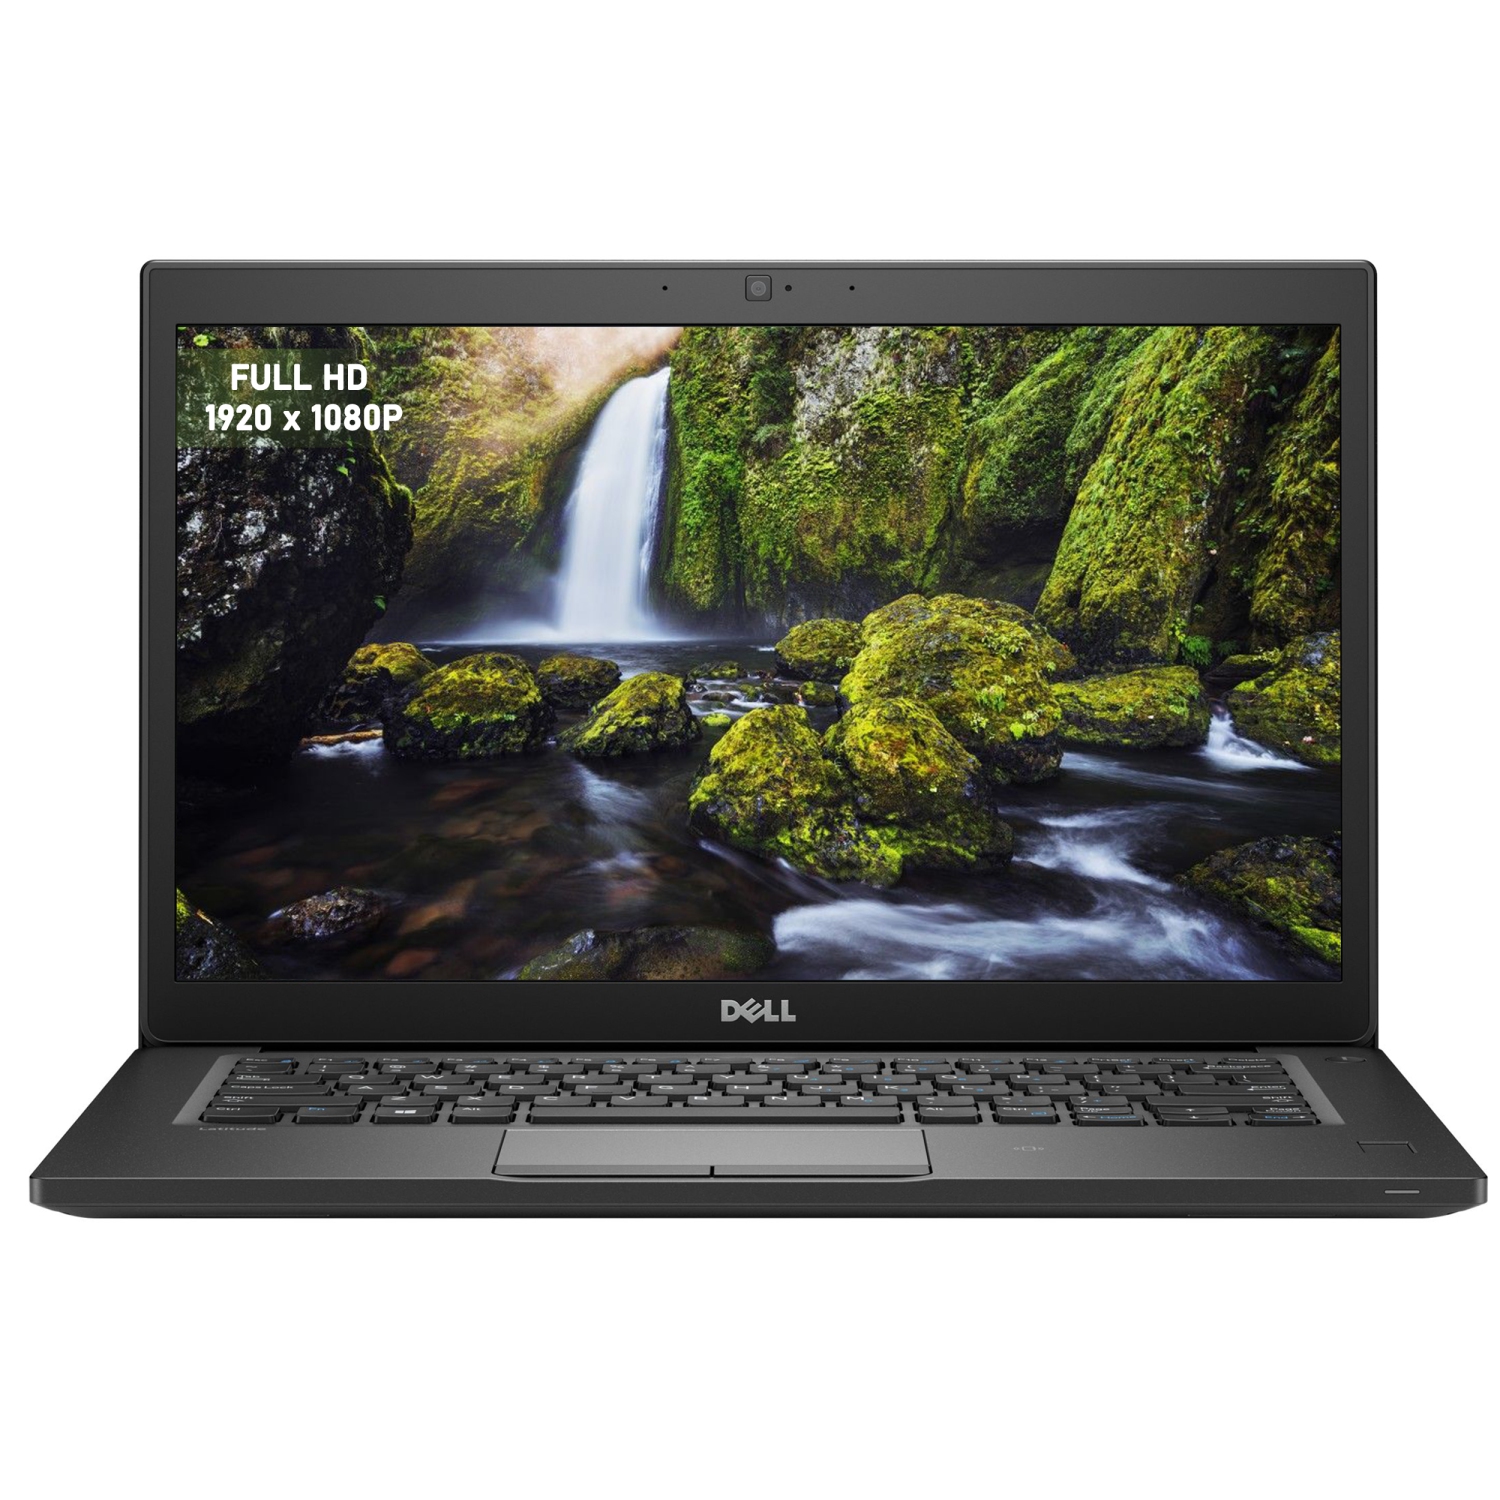 Refurbished (Good) - Dell Latitude 7490 Business Laptop 14 inch FHD Core i5 8th Gen 8350U 1.70 Ghz 16GB Memory 256GB SSD Webcam / Backlit Keyboard / Windows 10 Pro